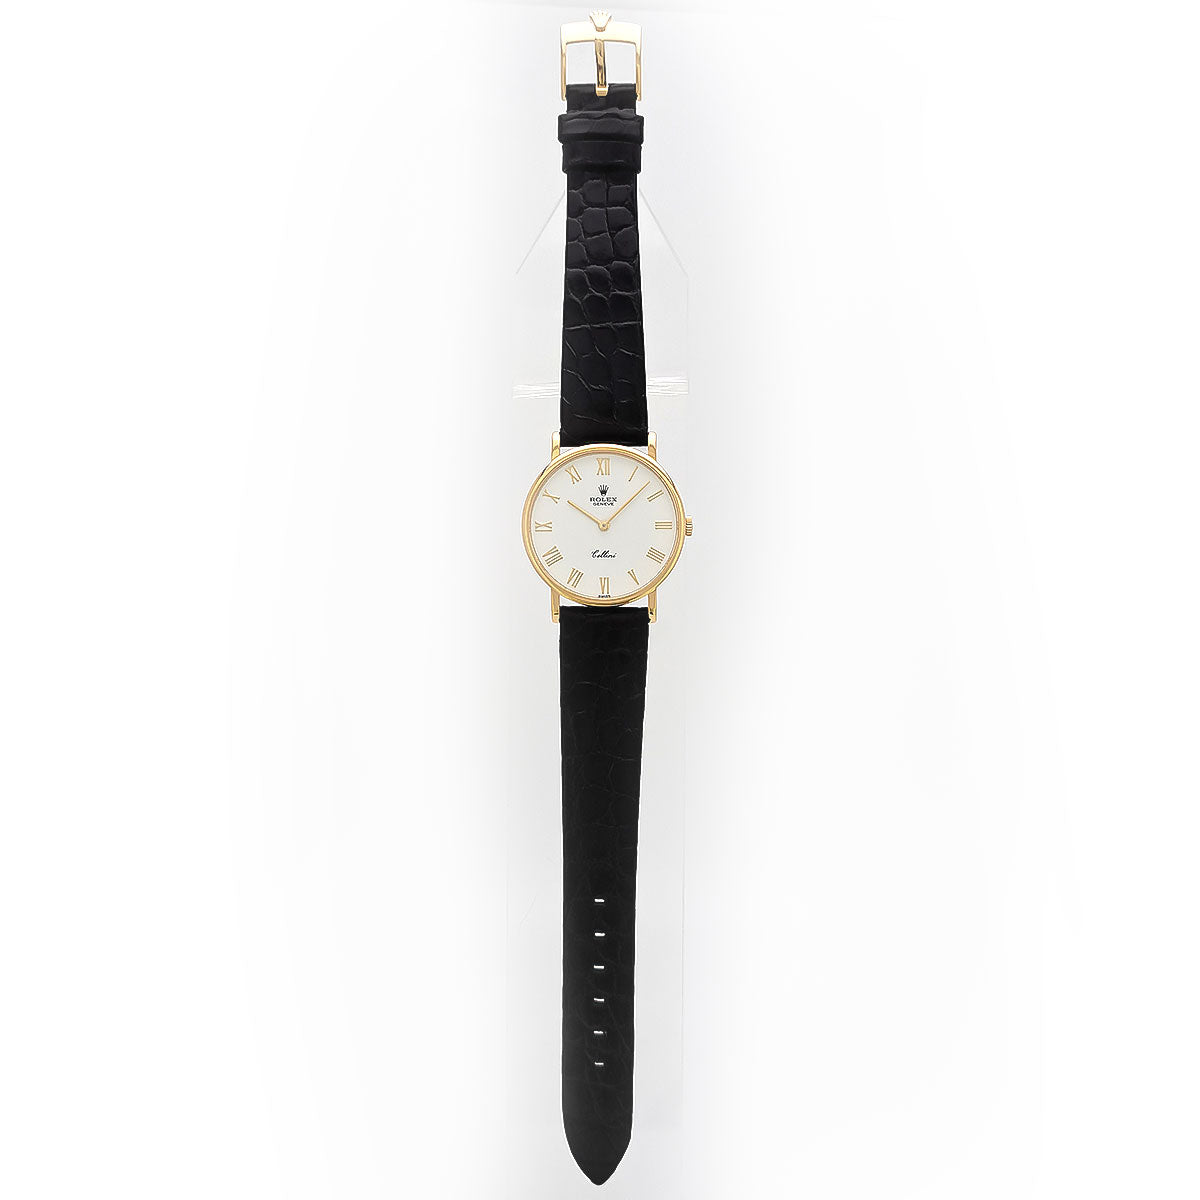 Manual Cellini Wrist Watch 5112.0